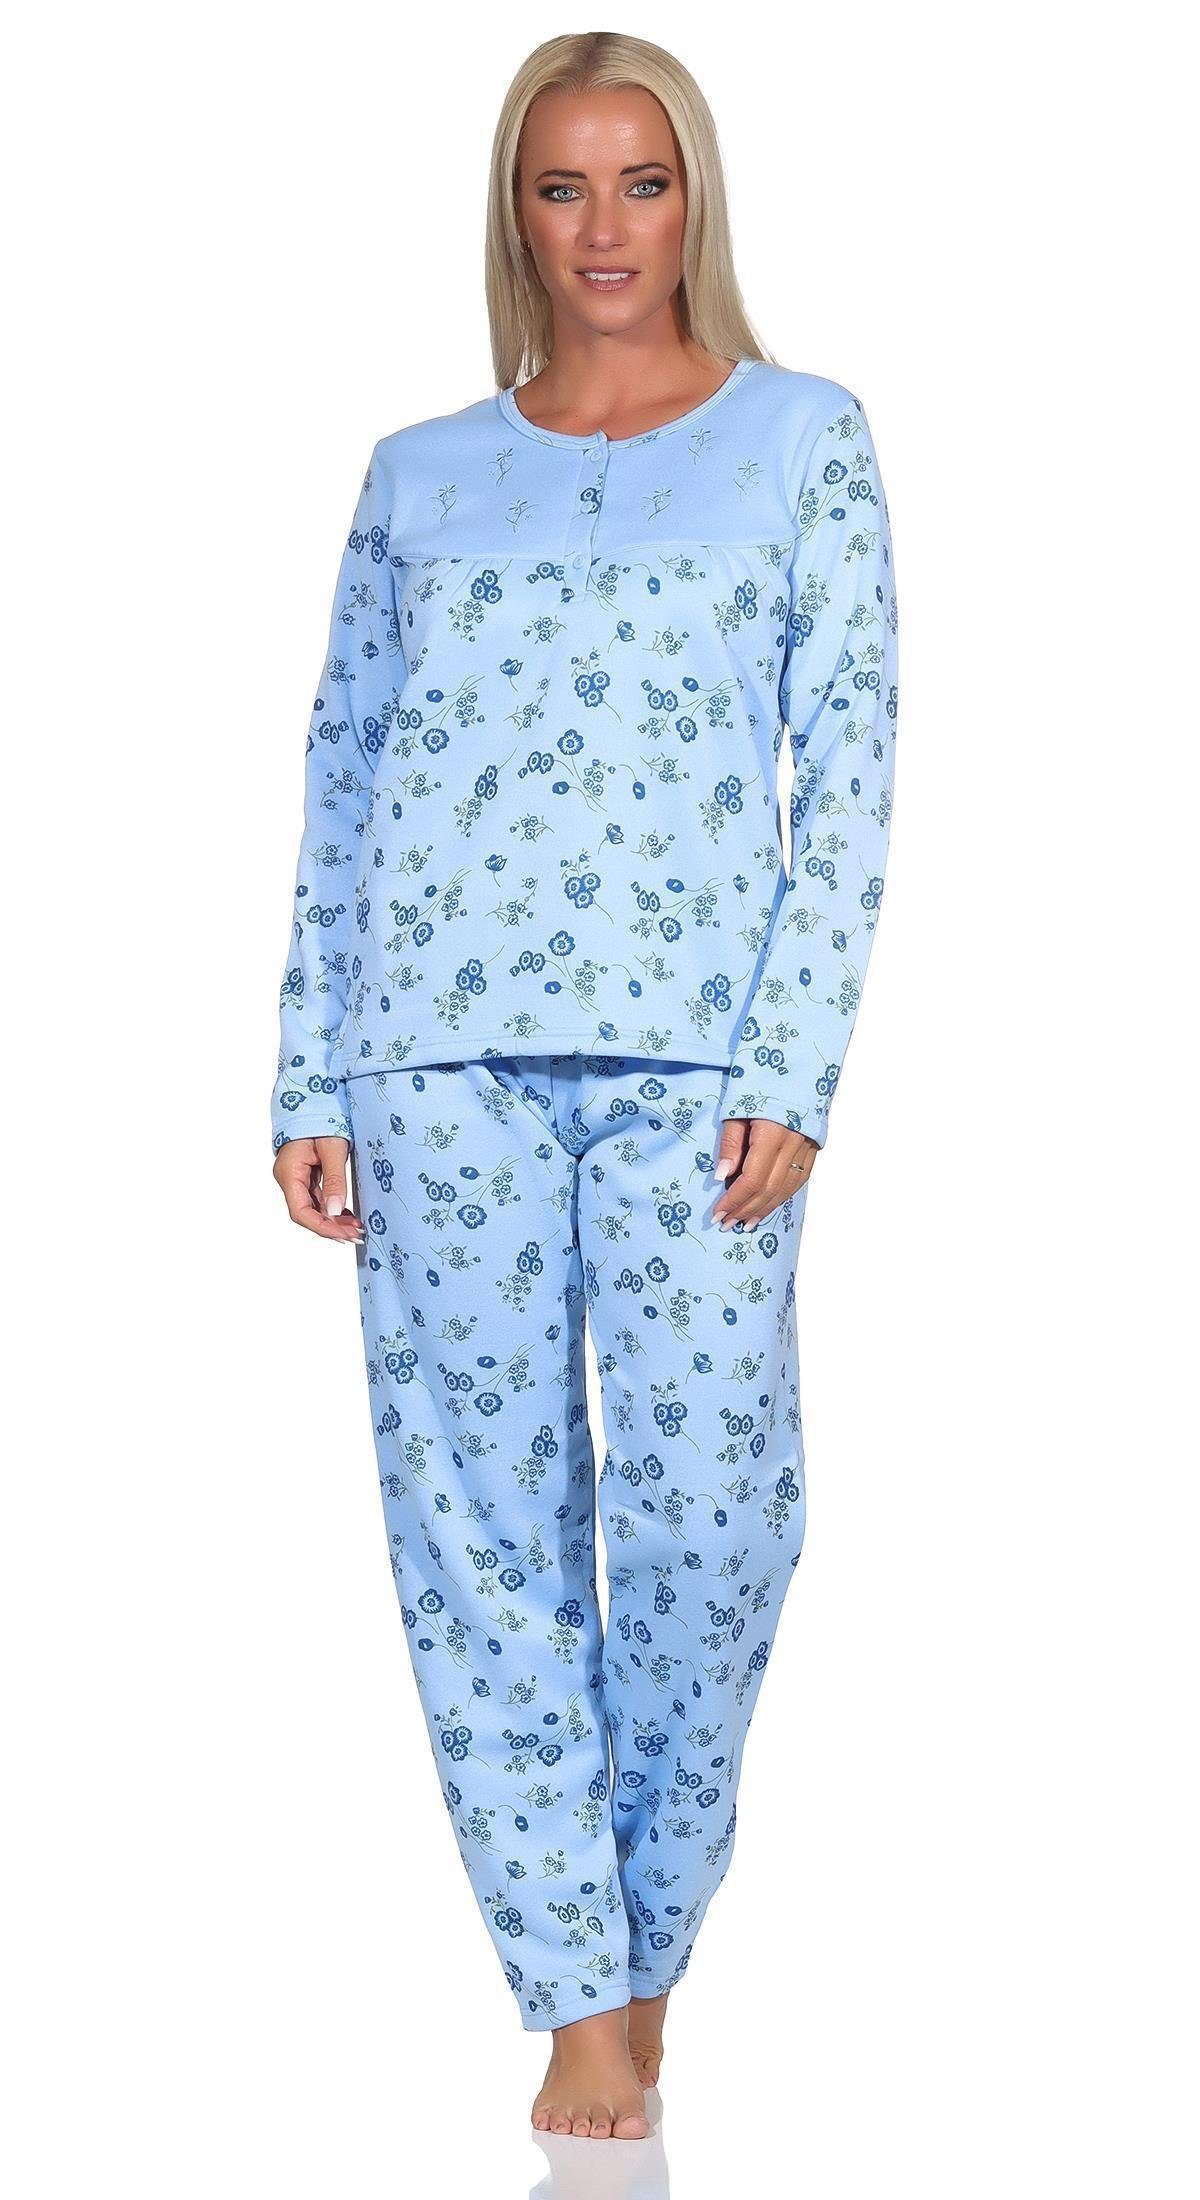 EloModa Pyjama Damen M L Thermo 2XL XL Winter (2 Gr. Blau tlg) zweiteiliger Pyjama Schlafanzug